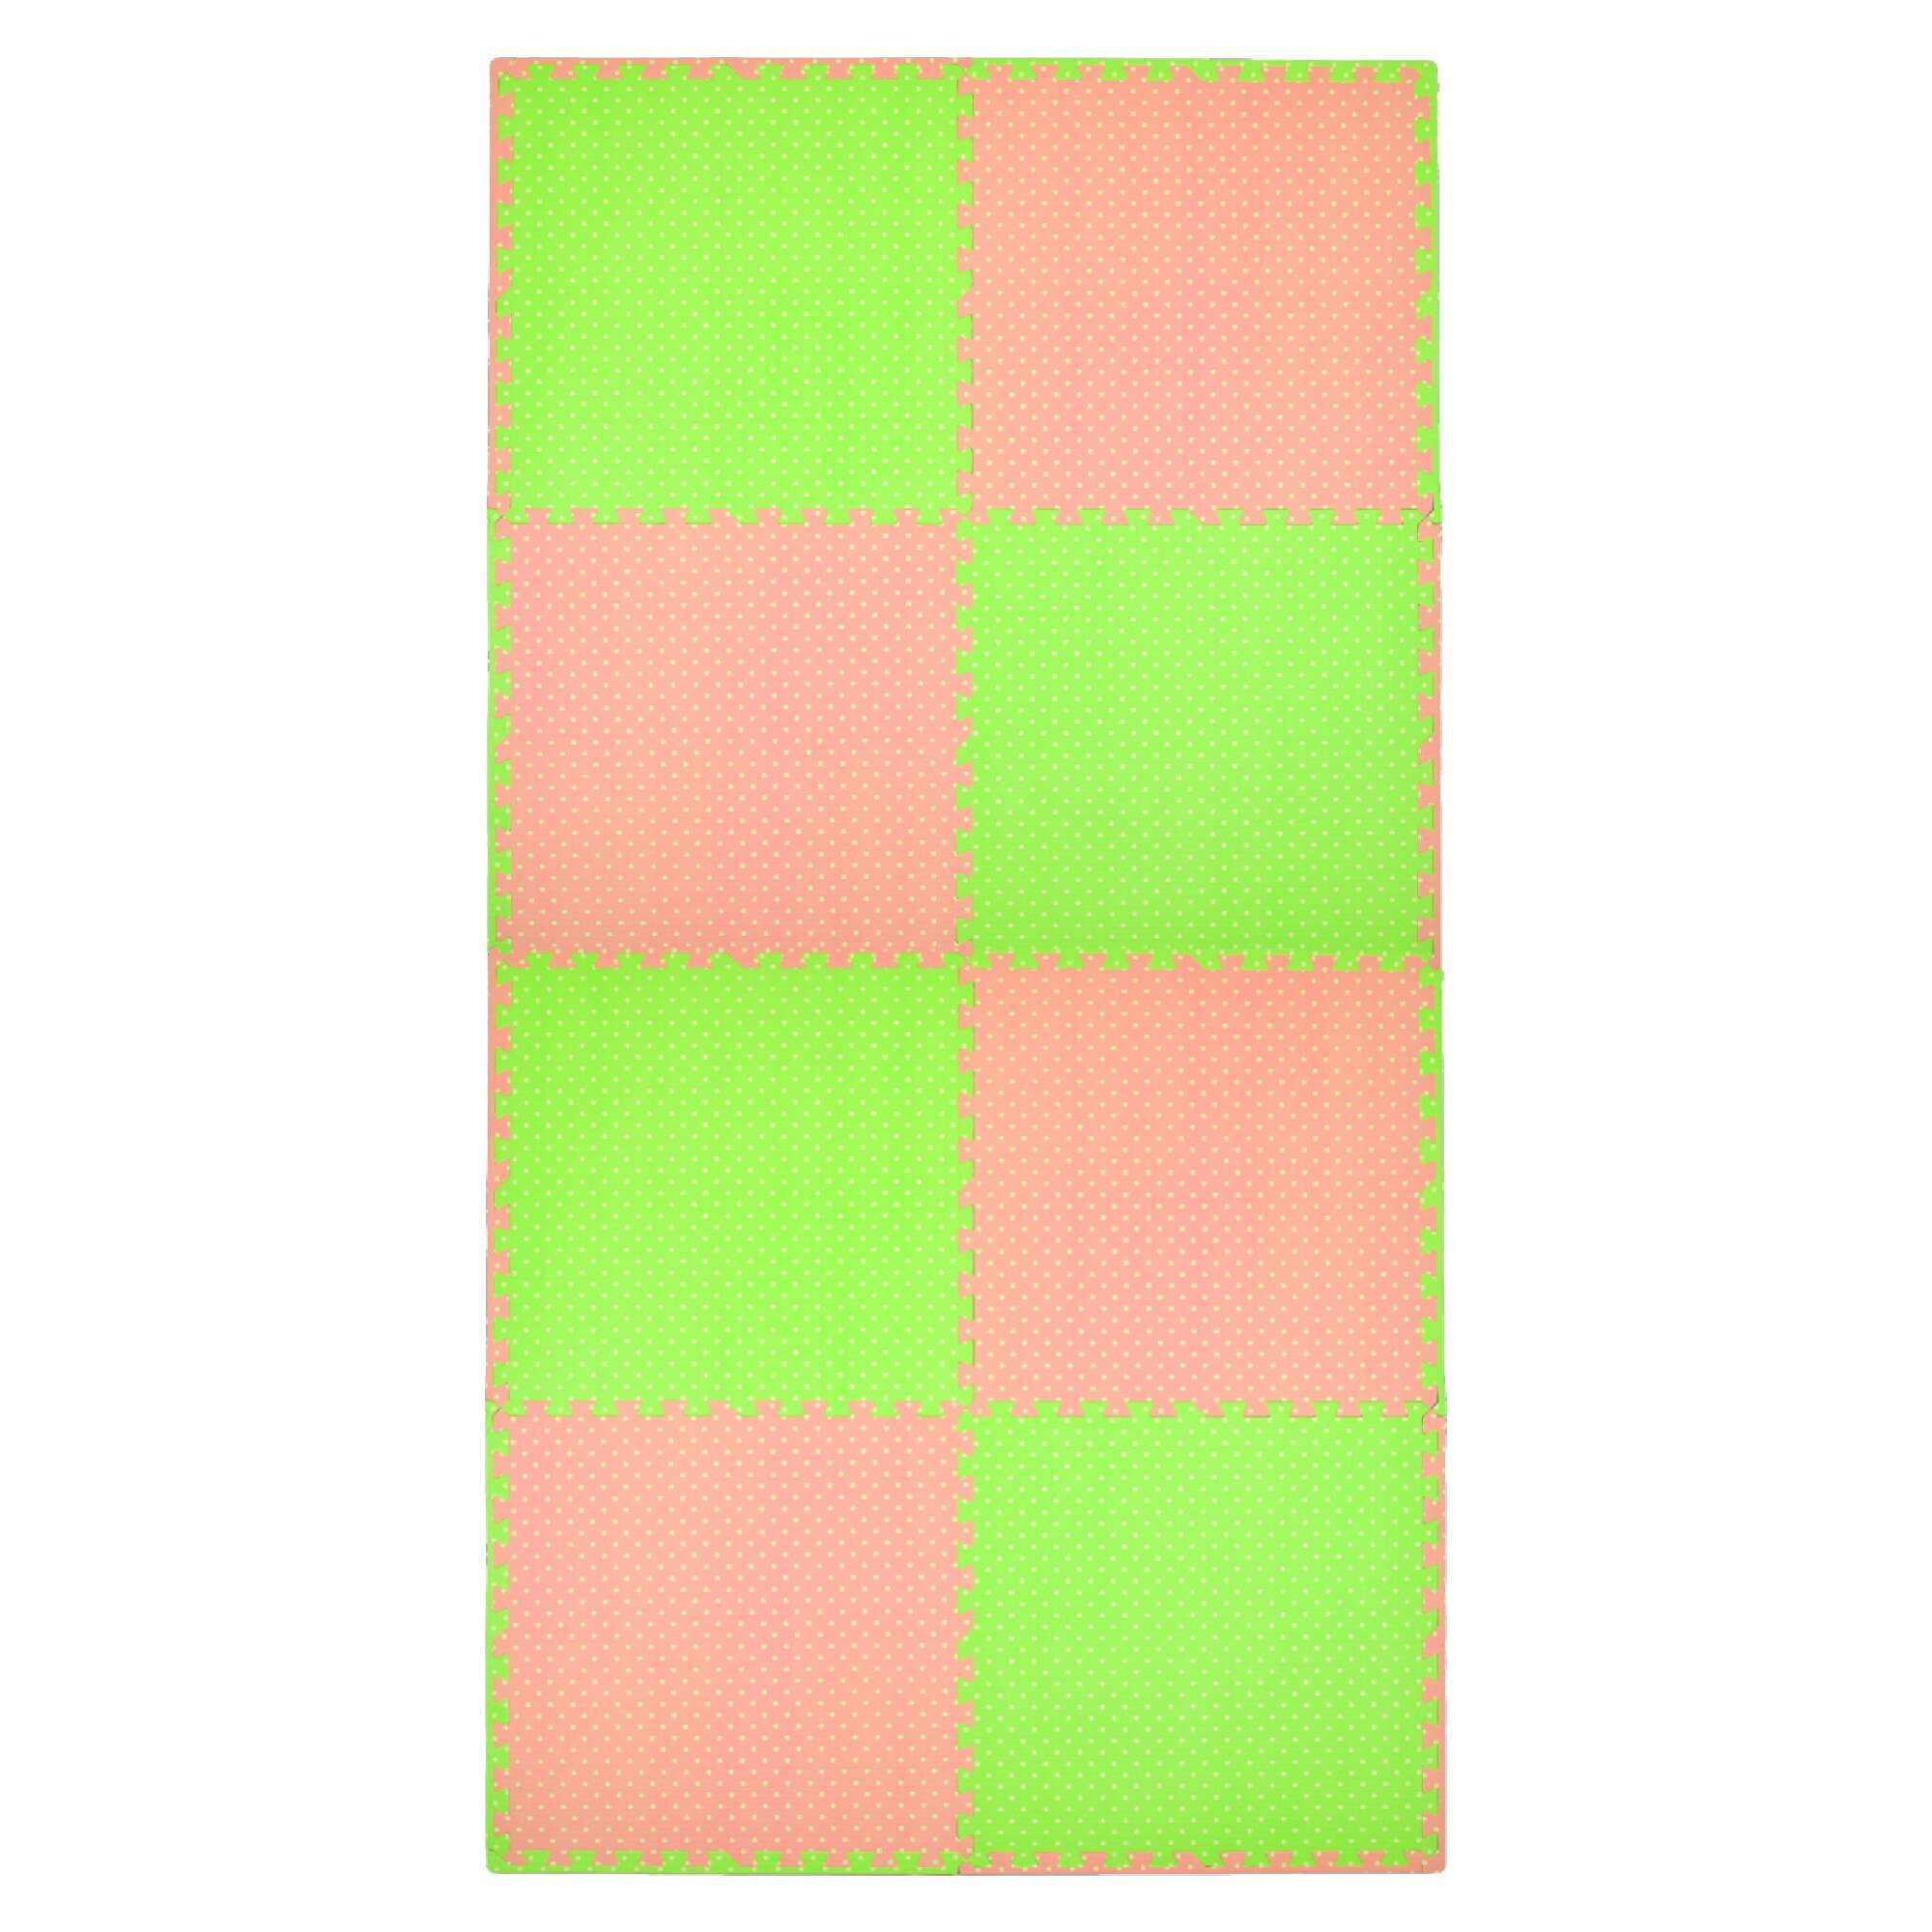 Humbi mata piankowa puzzle piankowe fitness wodoodporne pod basen 8 szt. rowo-zielona w kropki 240 x 120 x 1 cm